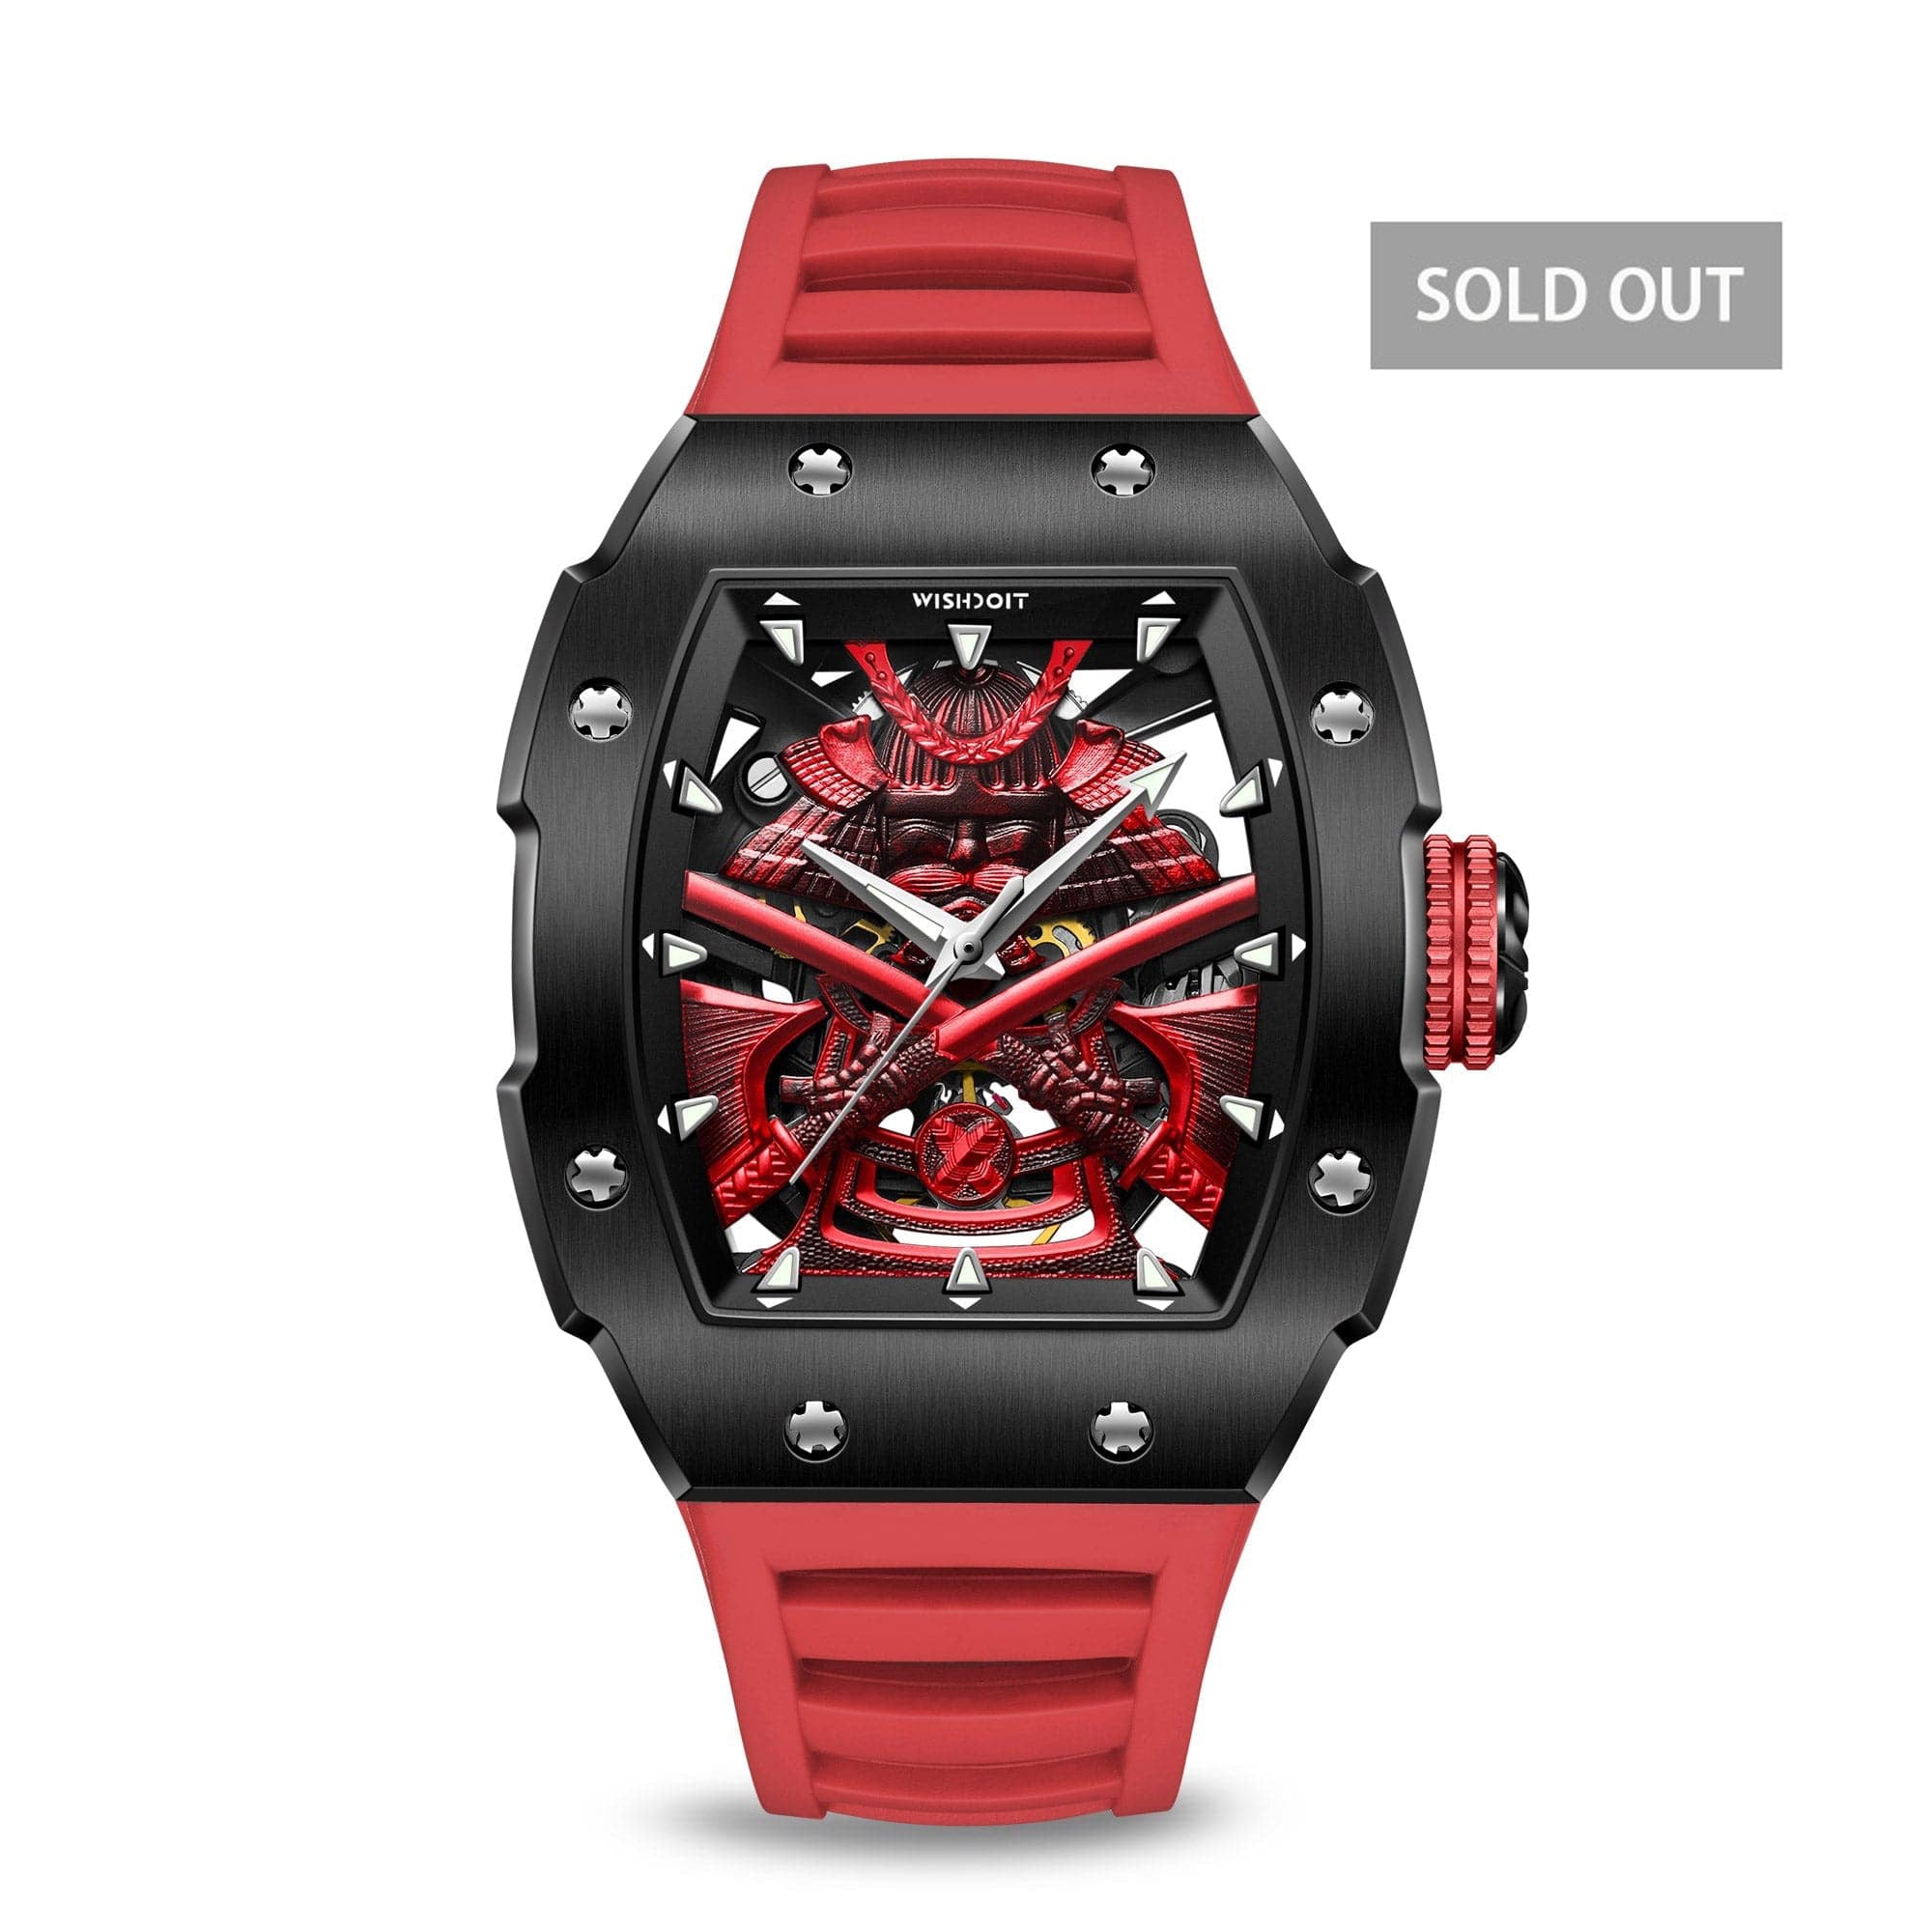 Wishdoit Watches Tonneau Luxury Automatic Mechanical Armor Watch | Fluorine Rubber Watch Strap|Silvery(Black Strap)